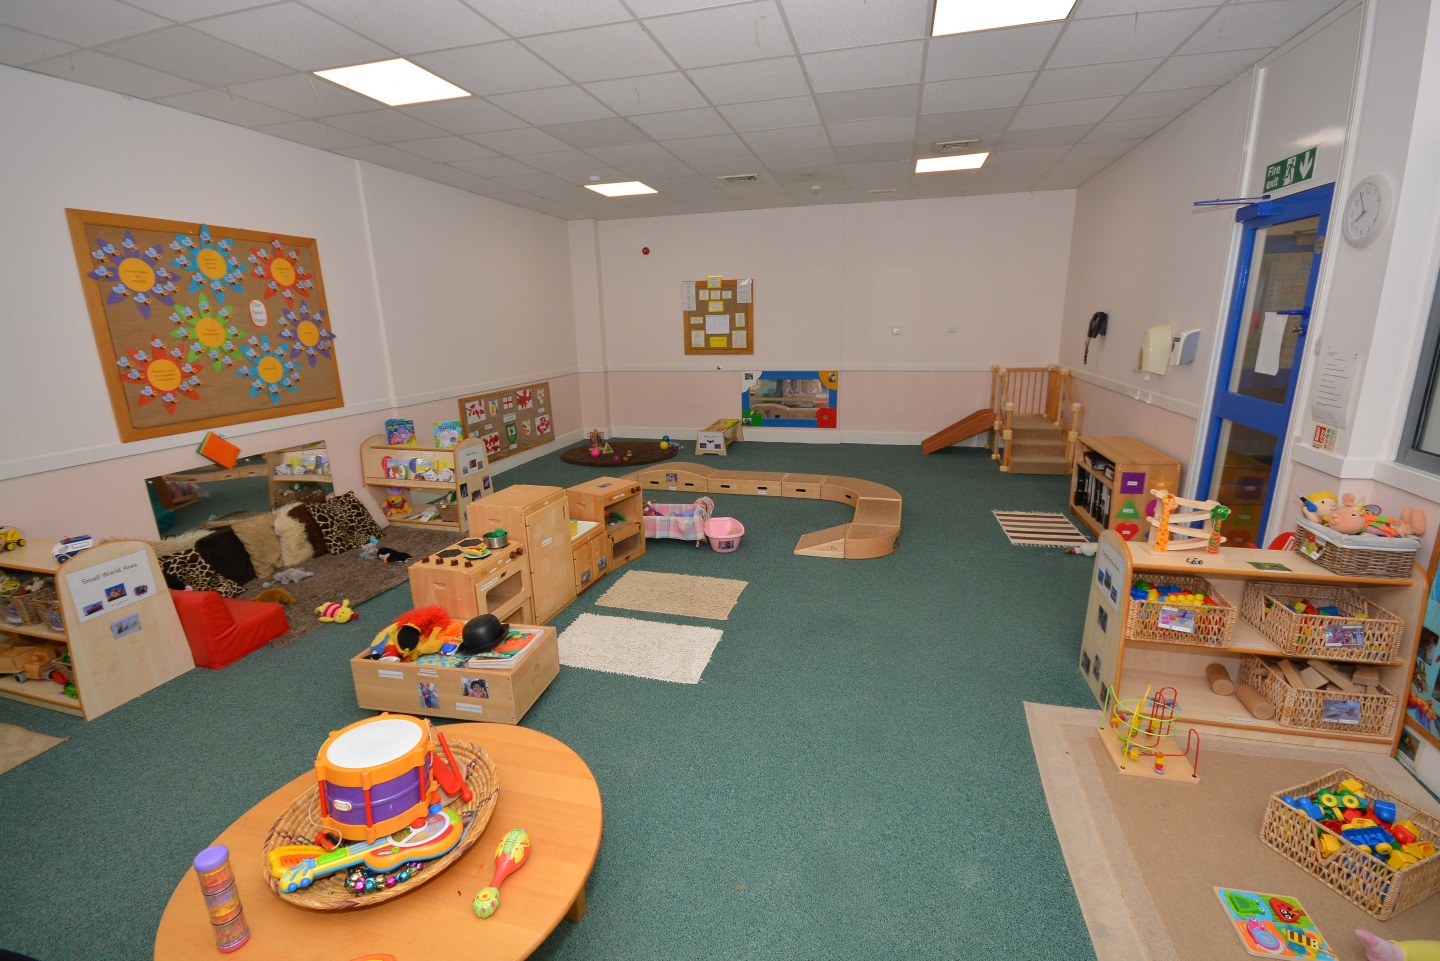 Bright Horizons Basildon Day Nursery and Preschool Basildon 01268 206269